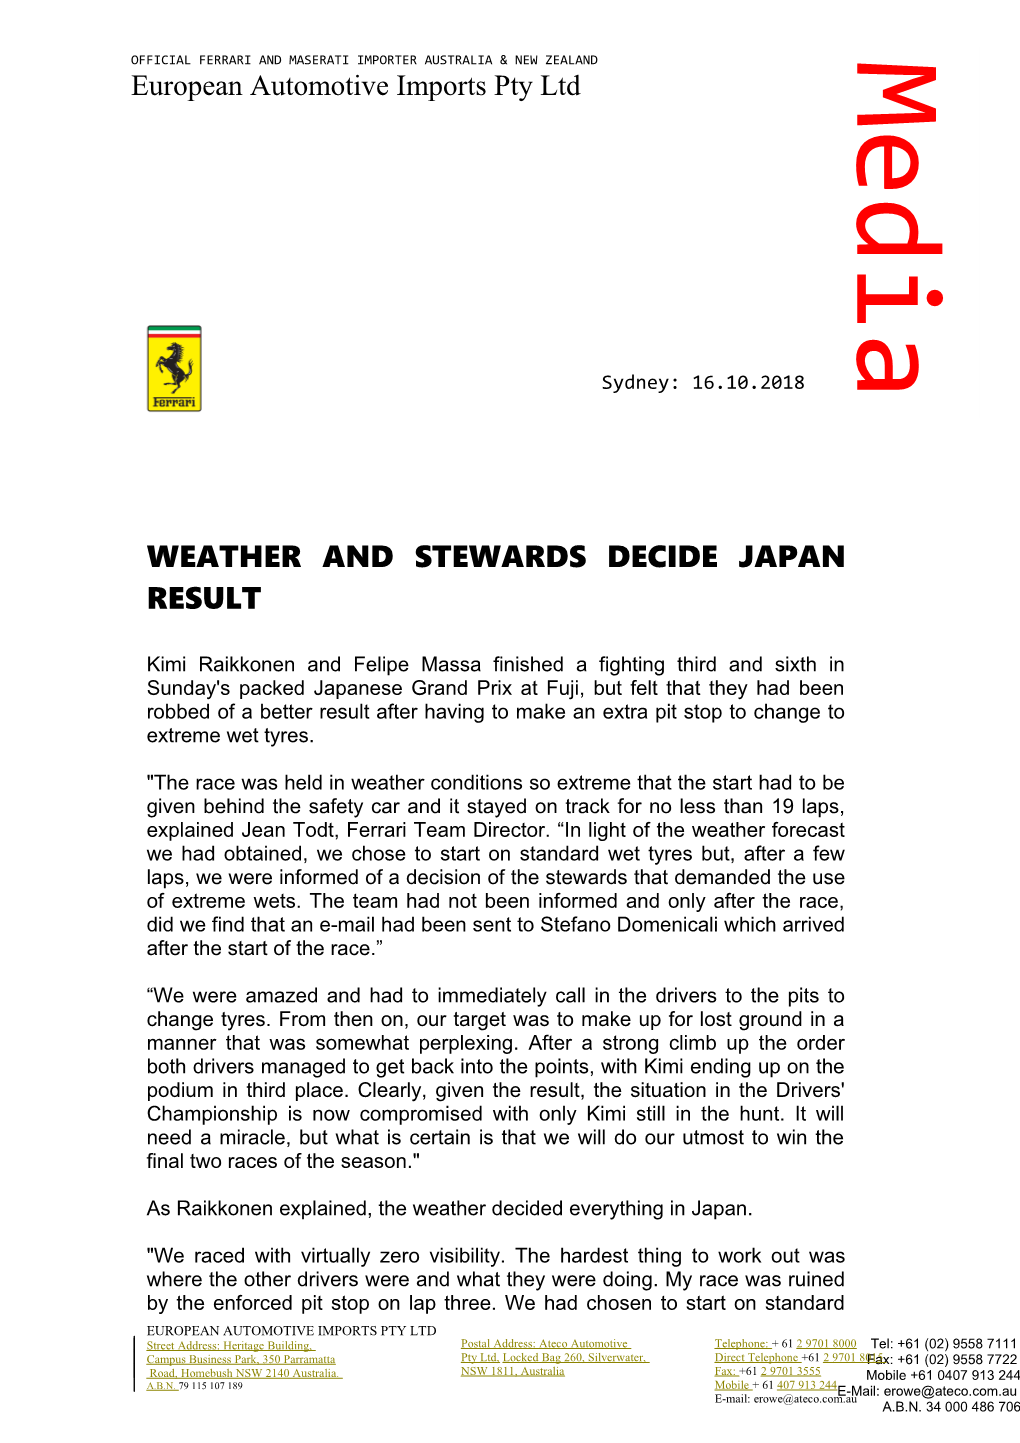 Weather and Stewards Decide Japan Result